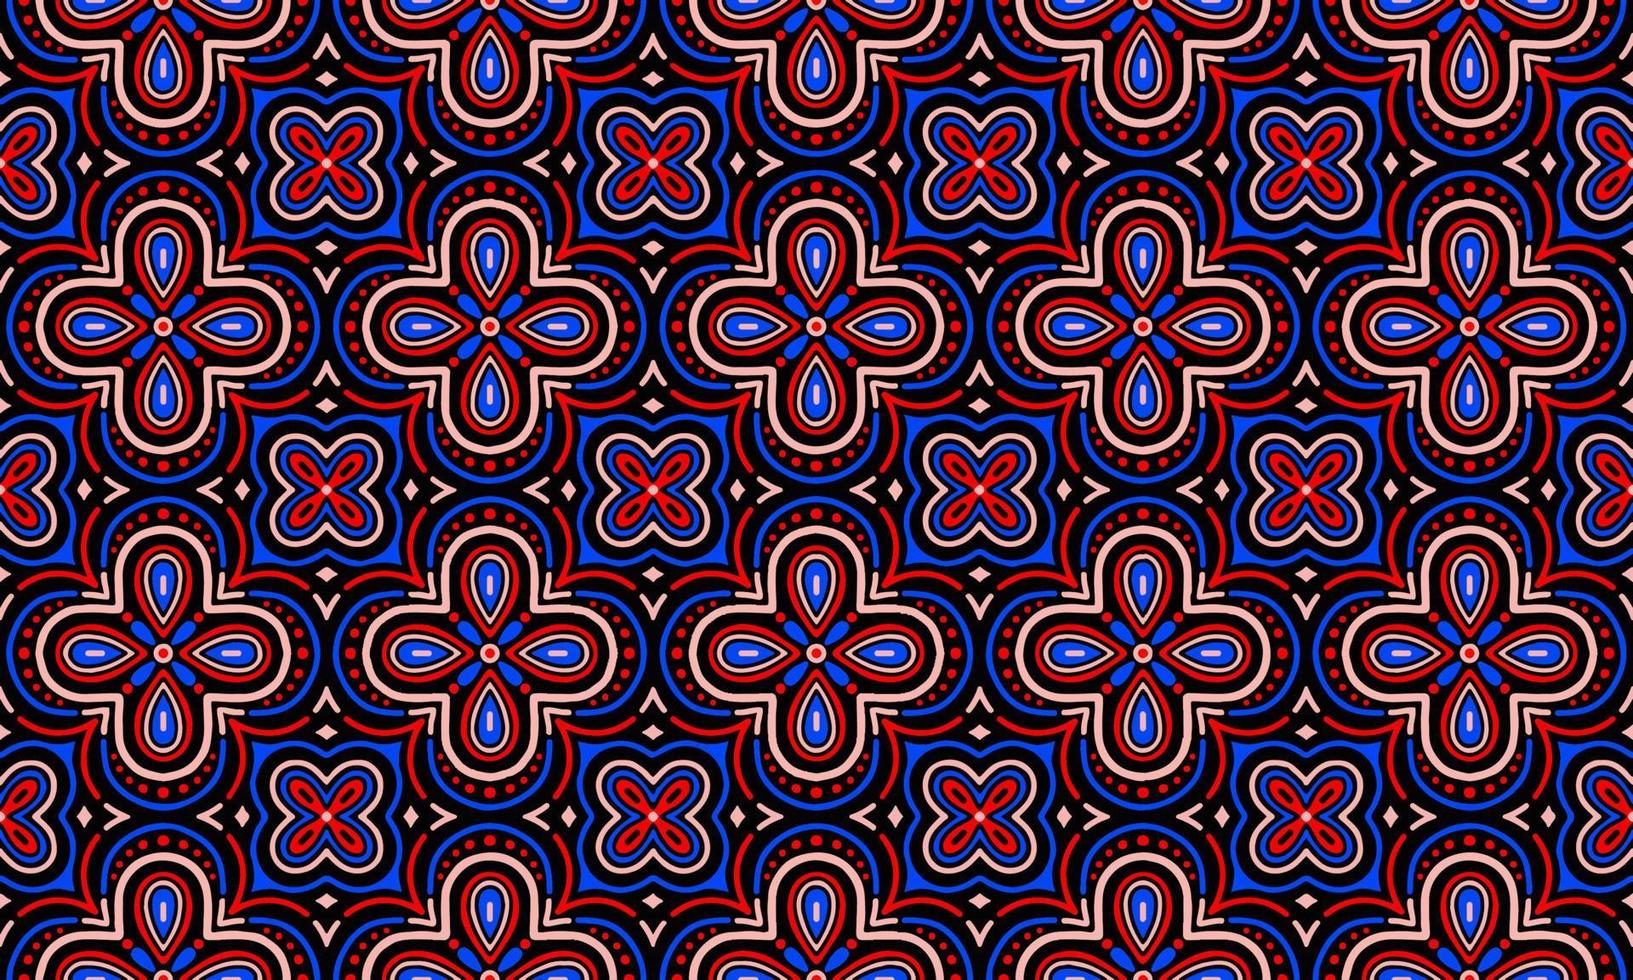 Ethnic Abstract Background cute Red Blue Black Flower geometric tribal folk Motif Arabic oriental native pattern traditional design carpet wallpaper clothing fabric wrapping print batik folk vector